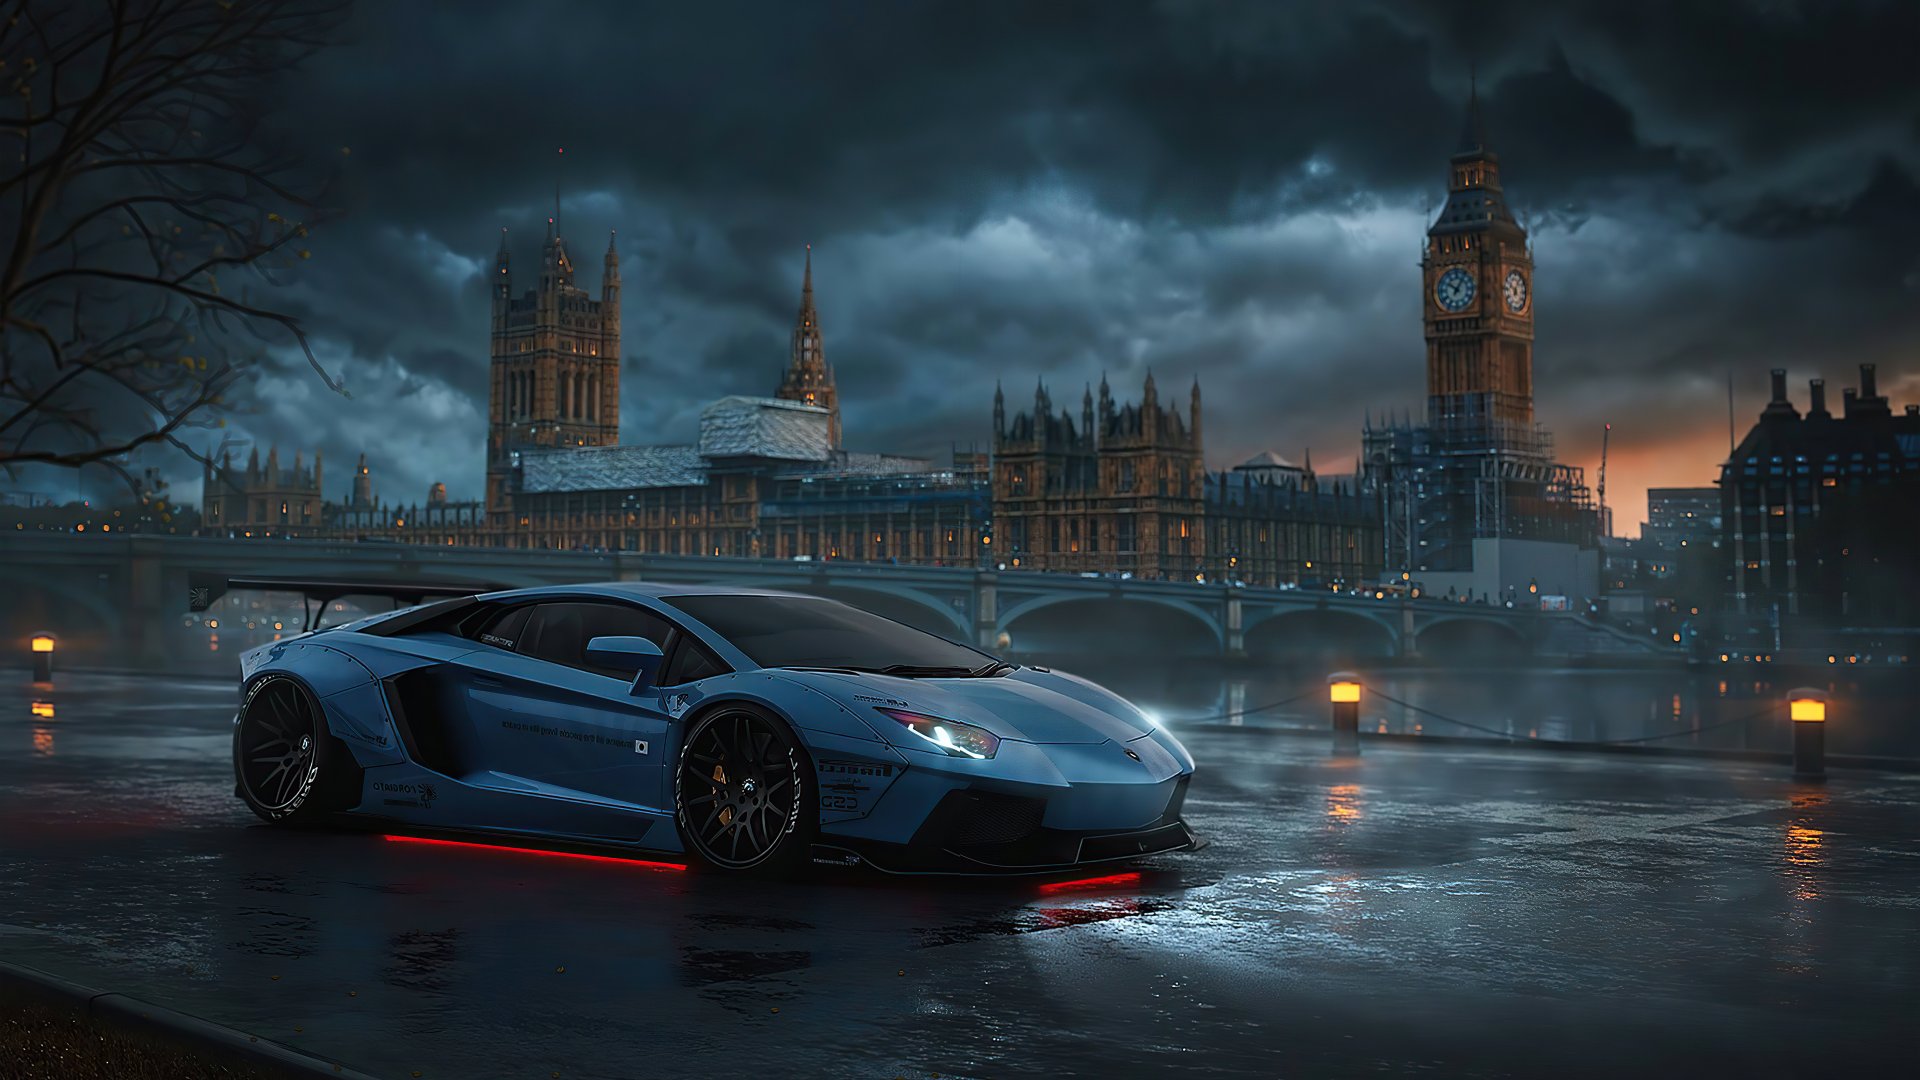 Lamborghini in London Wallpaper 4k Ultra HD ID:7903